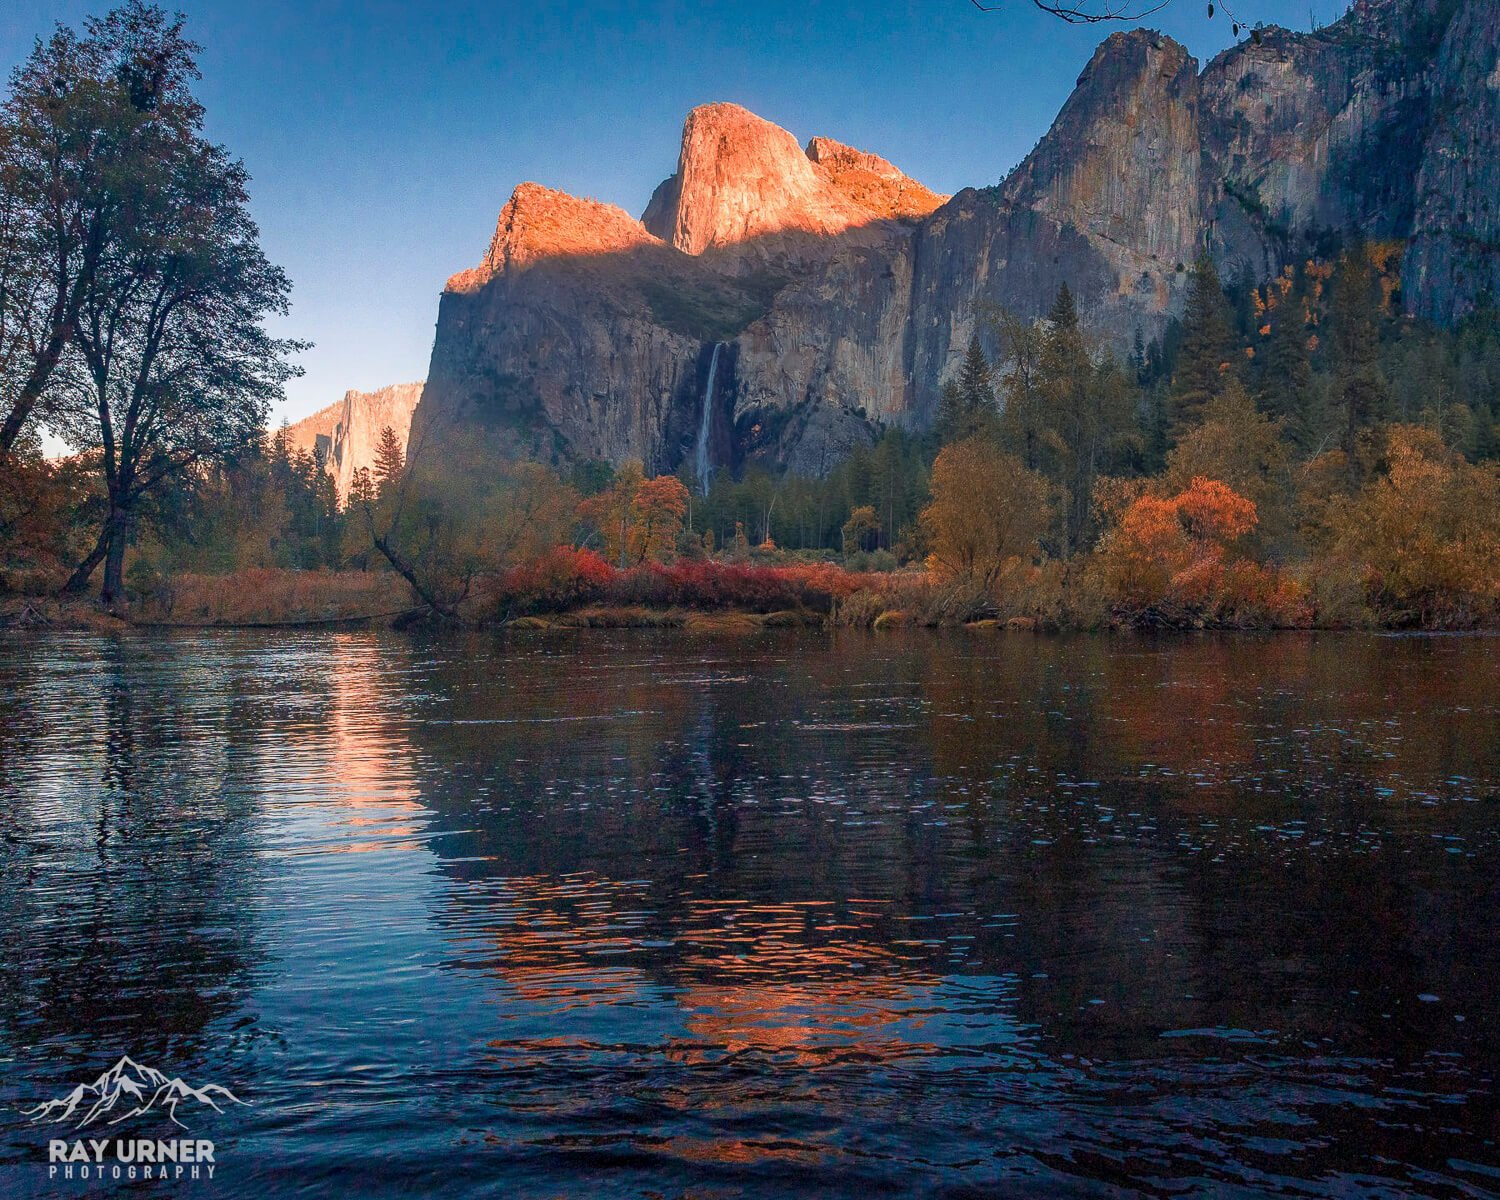 Valley-View-Yosemite-National-Park-001.jpg